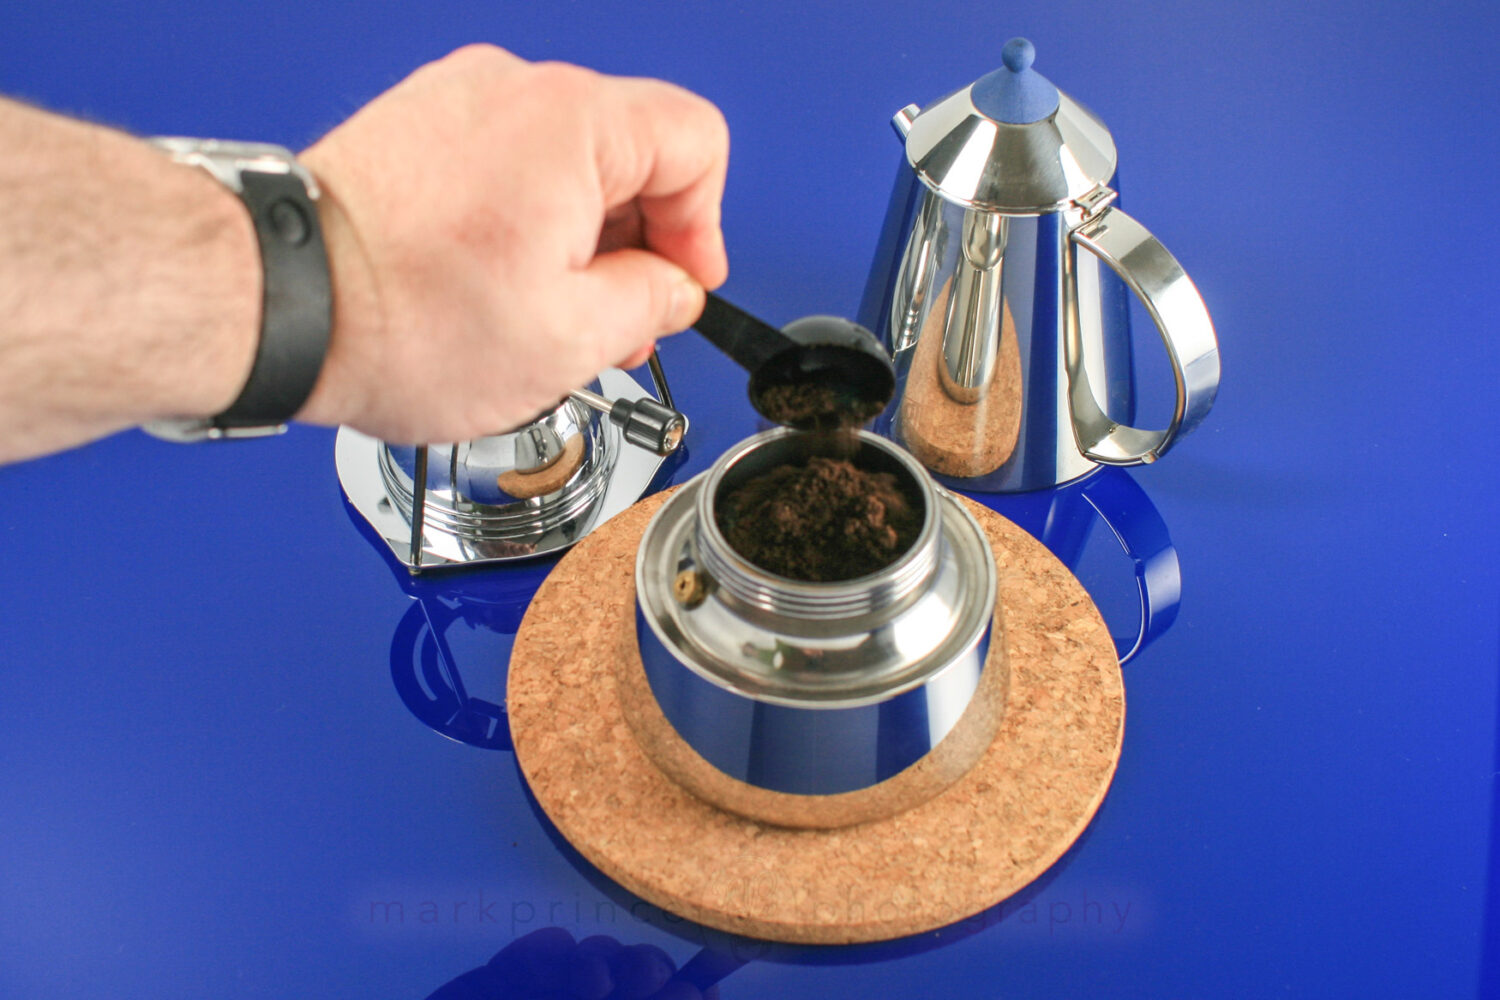 Adding coffee to the grounds chamber on a moka pot.